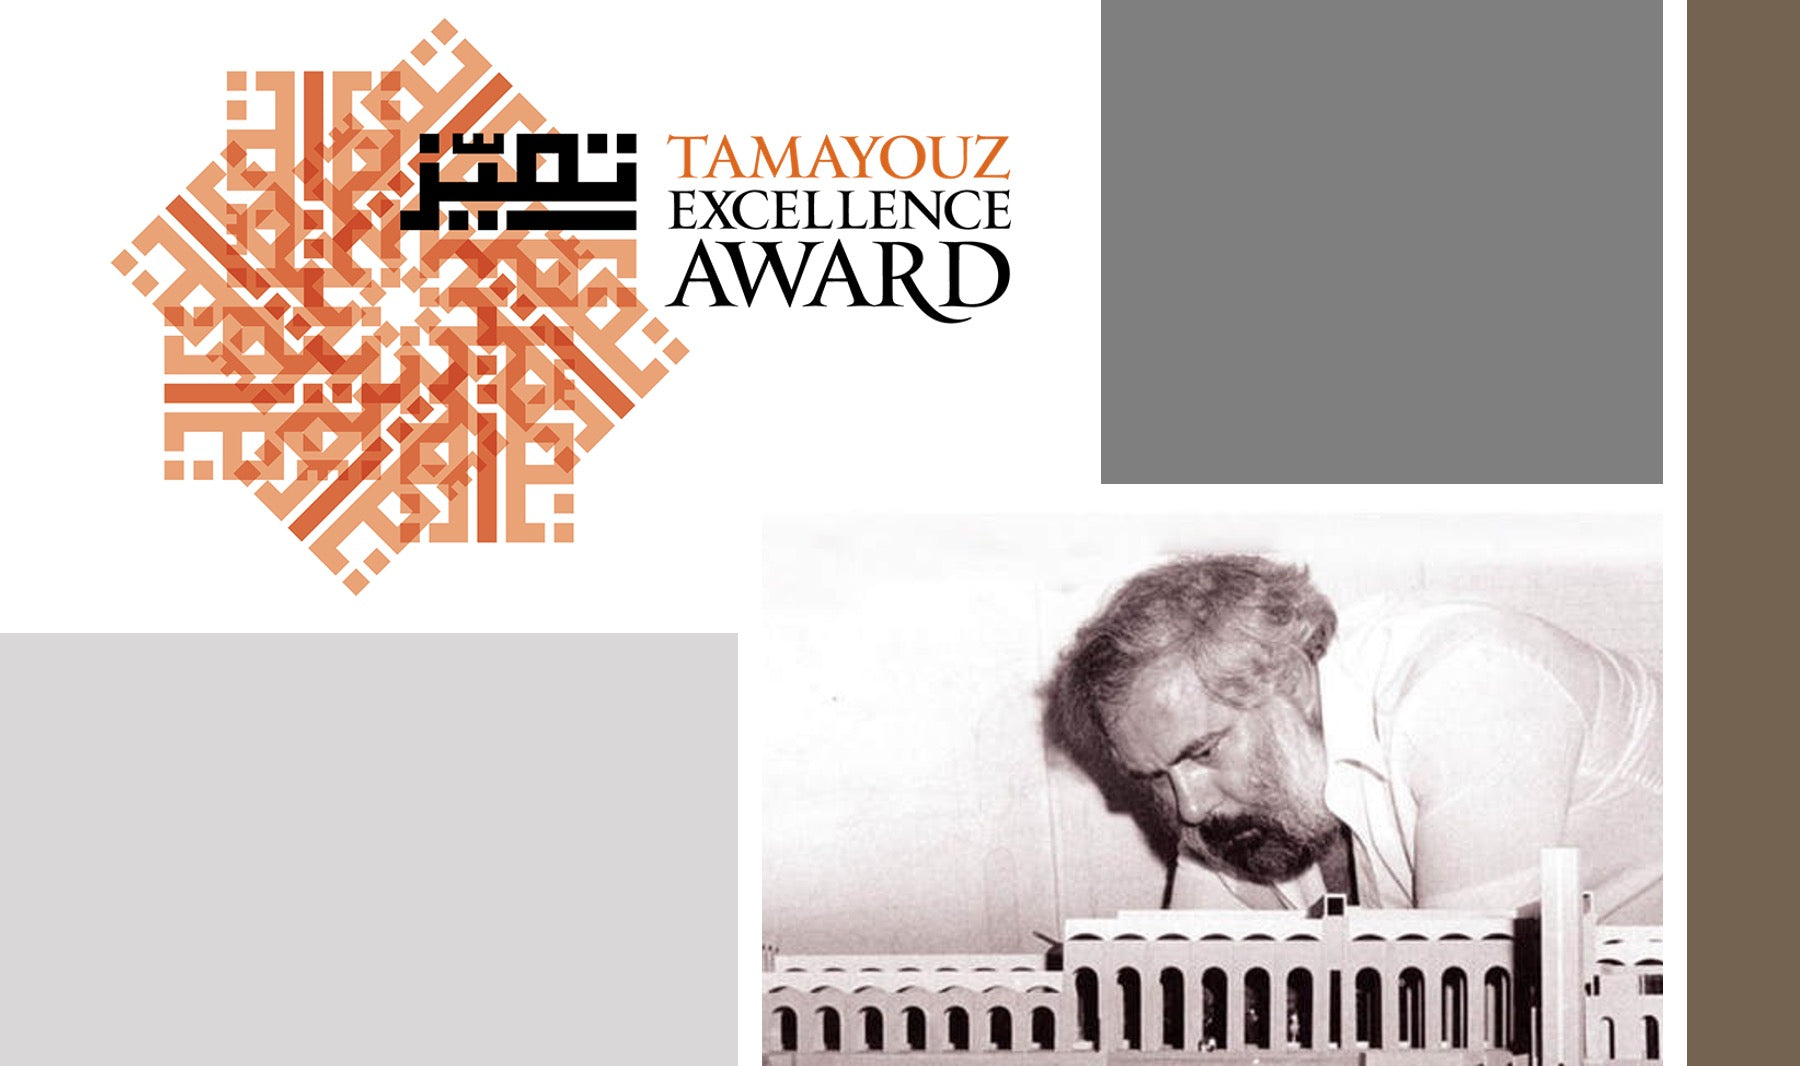 Tamayouz Award 2018